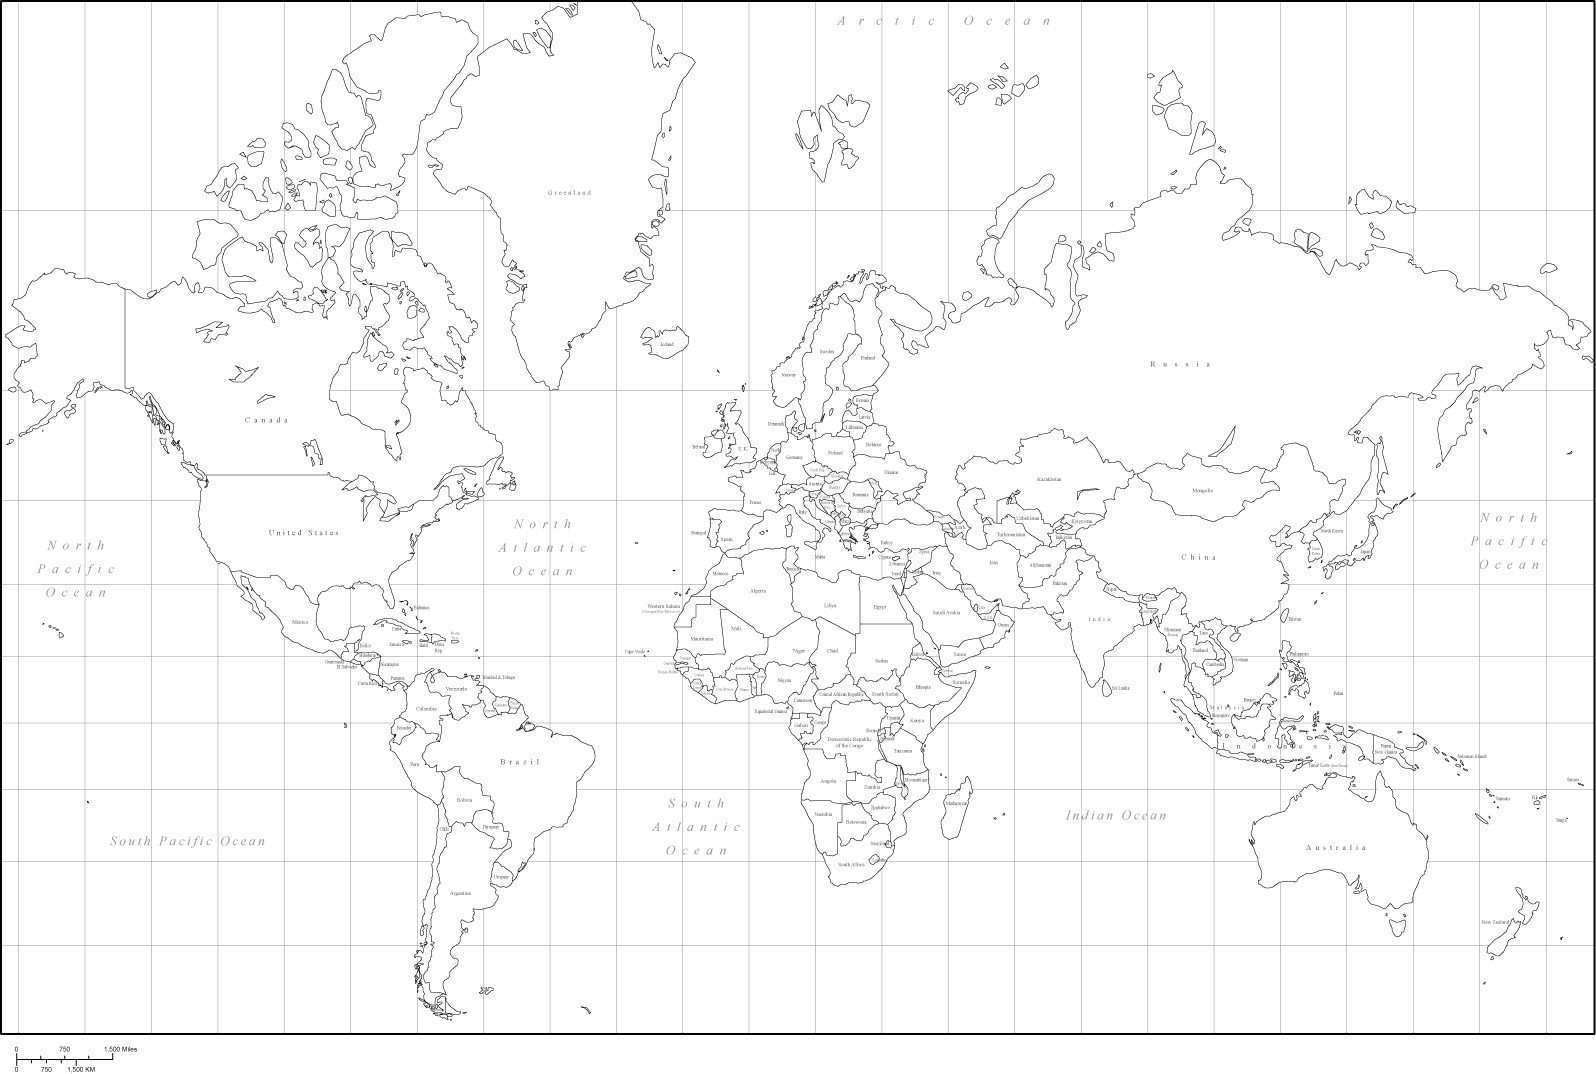 Mercator Map Of The World